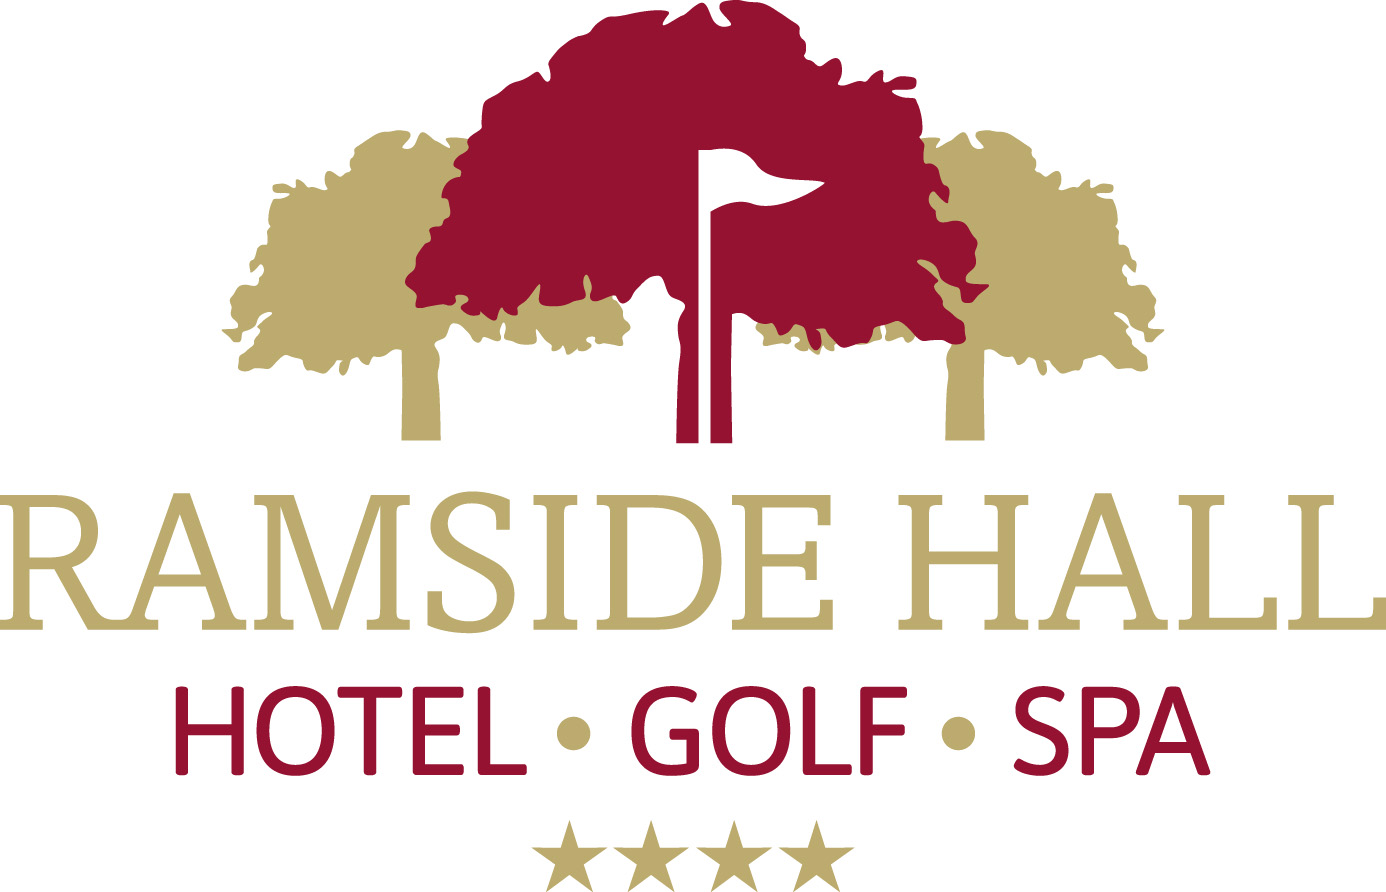 Ramside Hall - Hotel, Golf & Spa